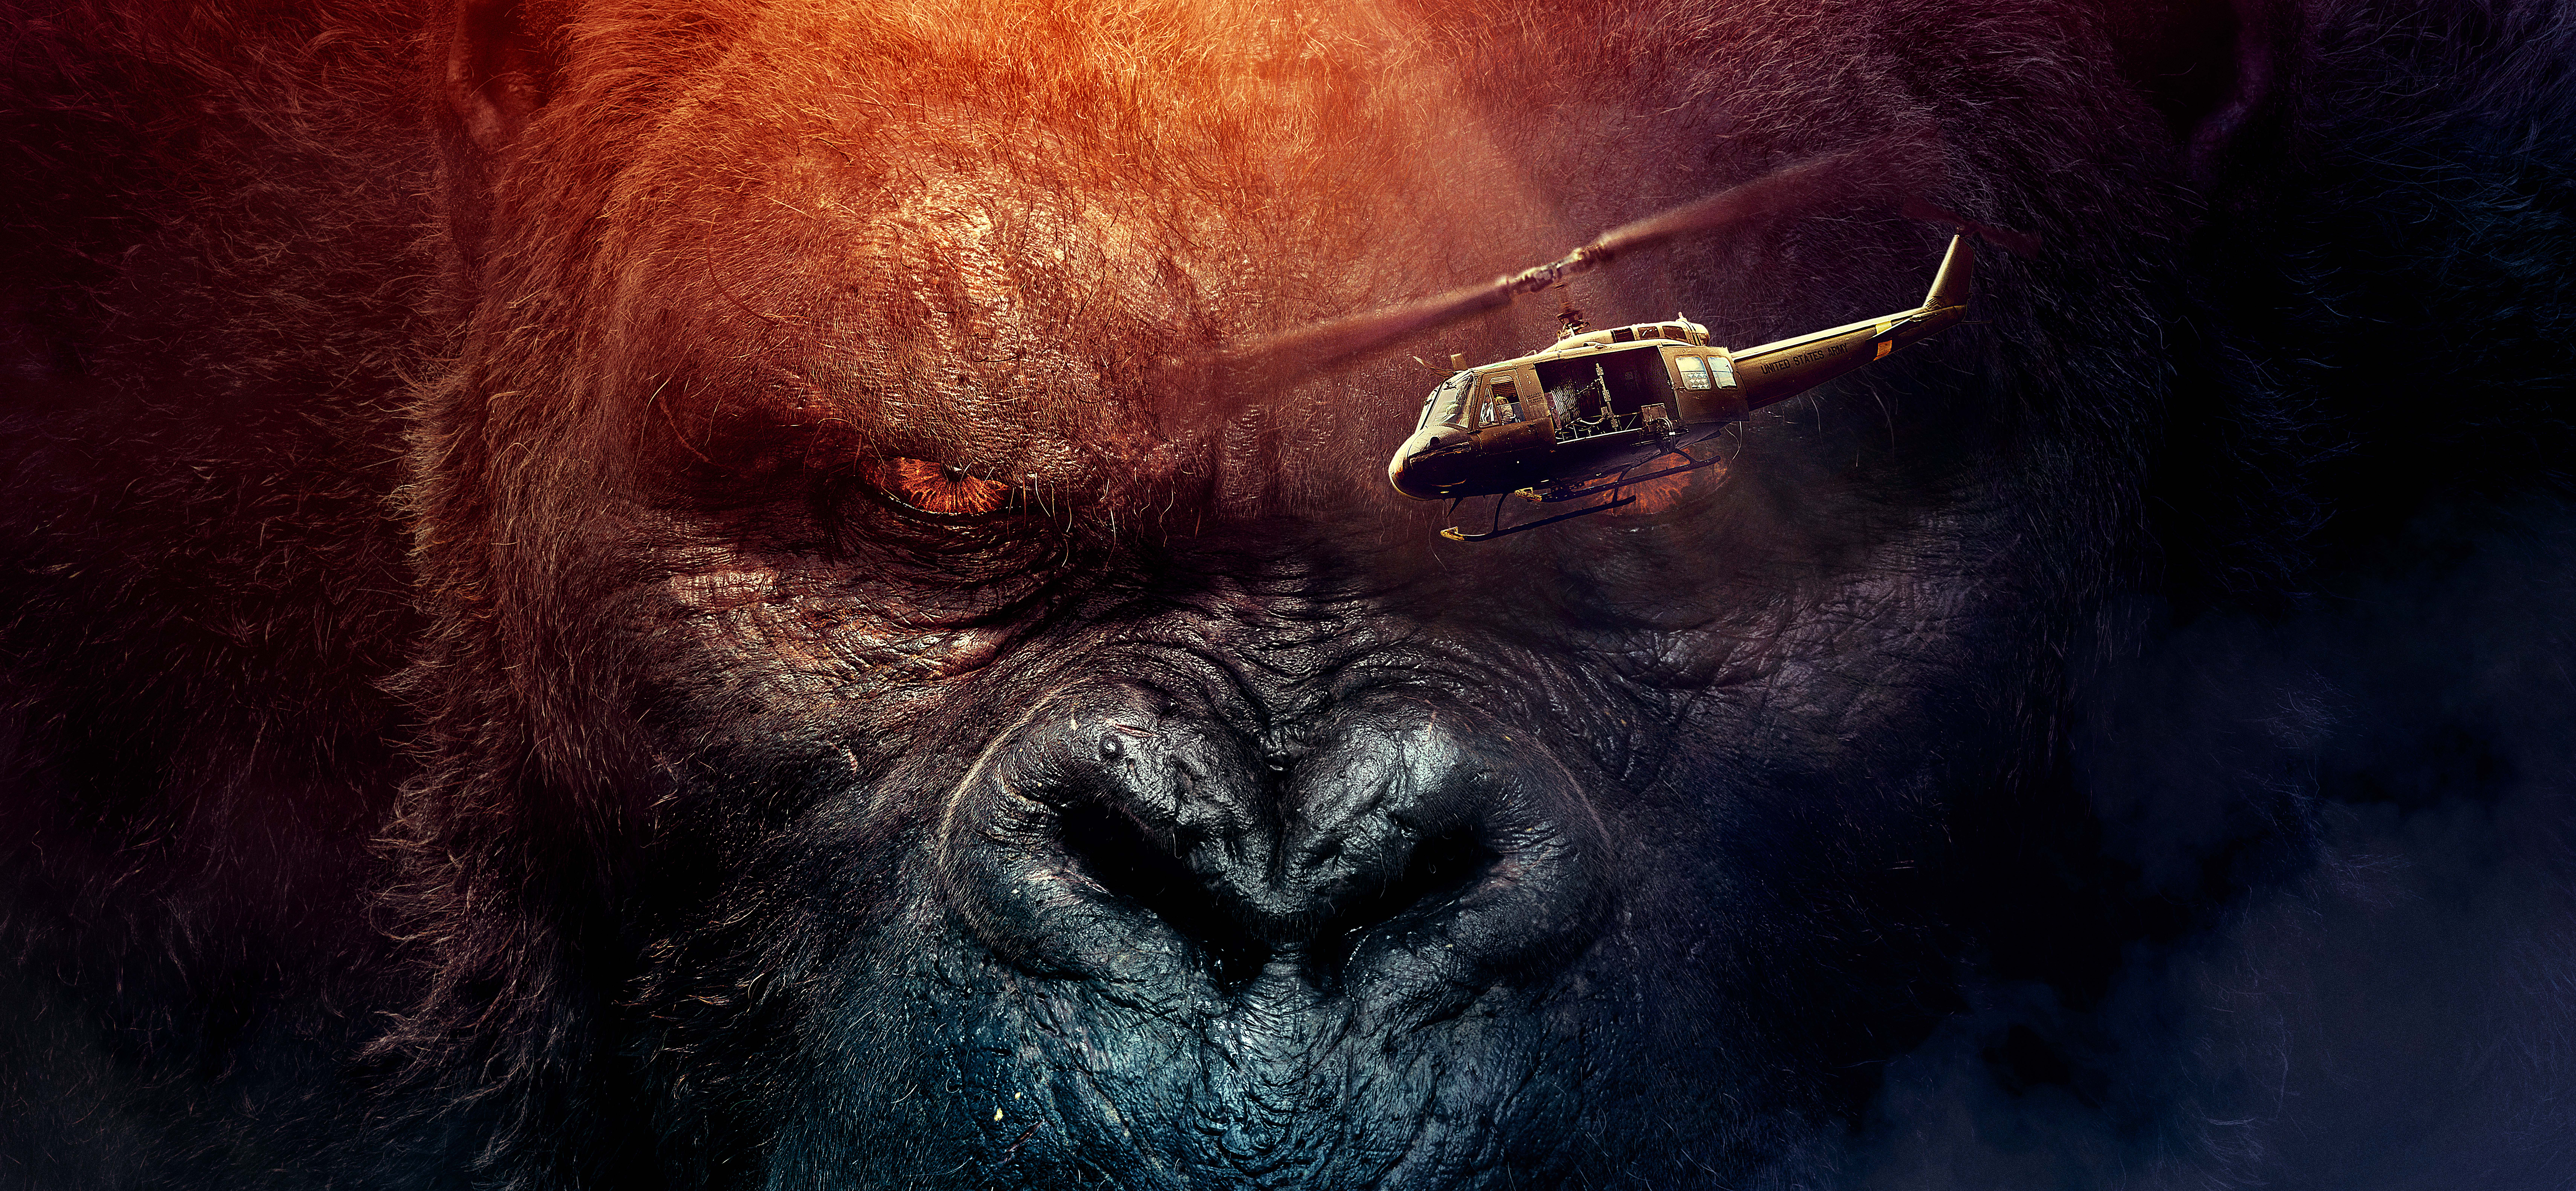 Kong: Skull Island 8k Ultra HD Wallpaper. Background Image